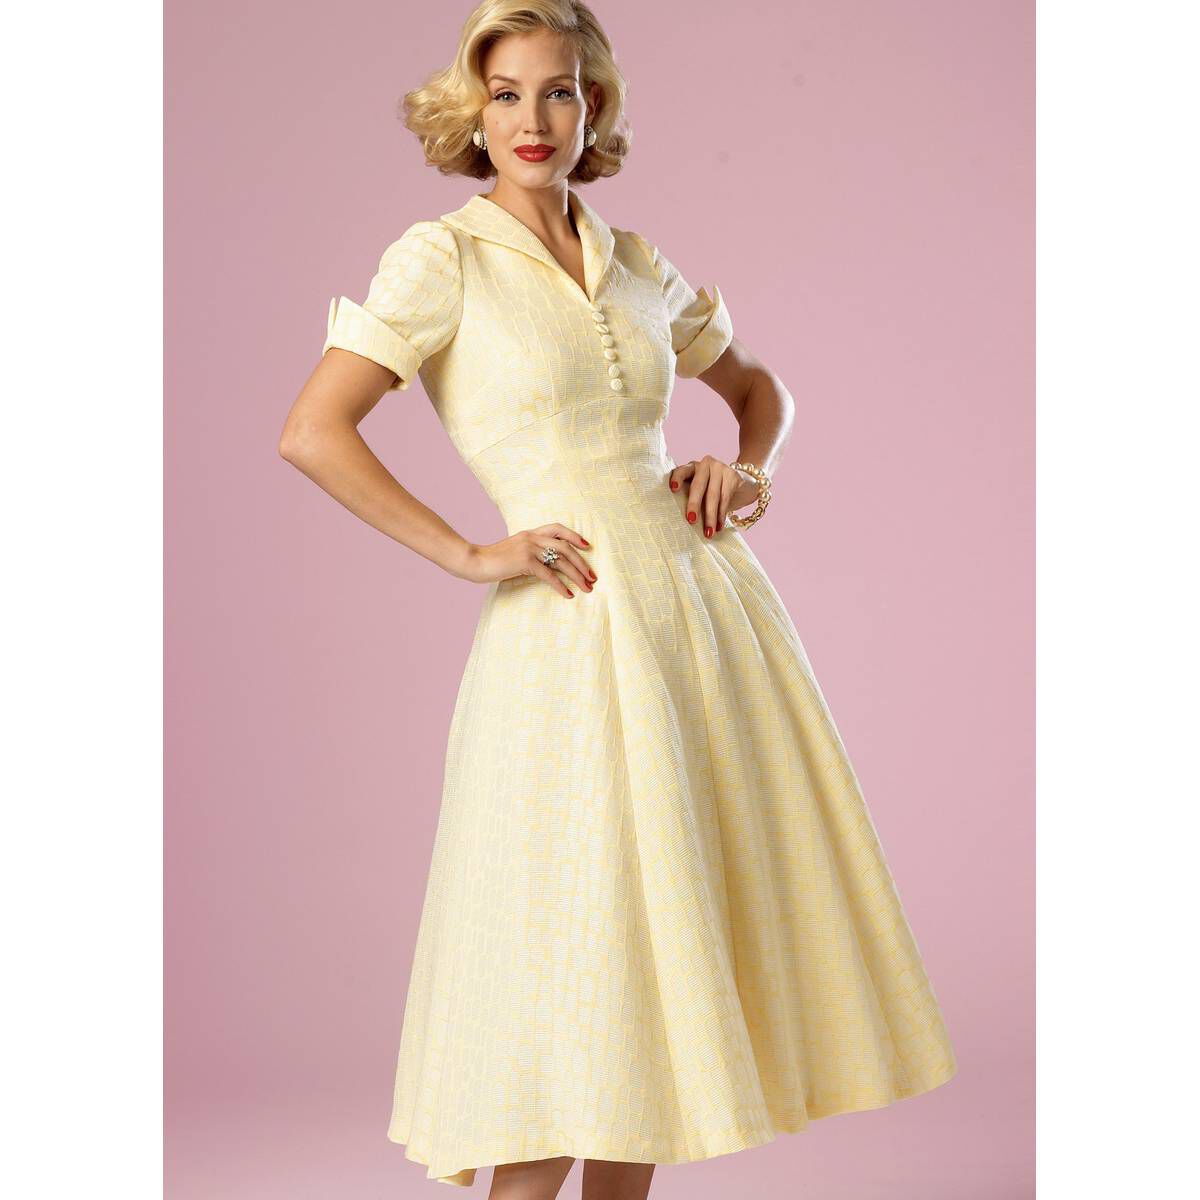 Butterick Vintage Dress Sewing Pattern B6018 (6-14) | Hobbycraft